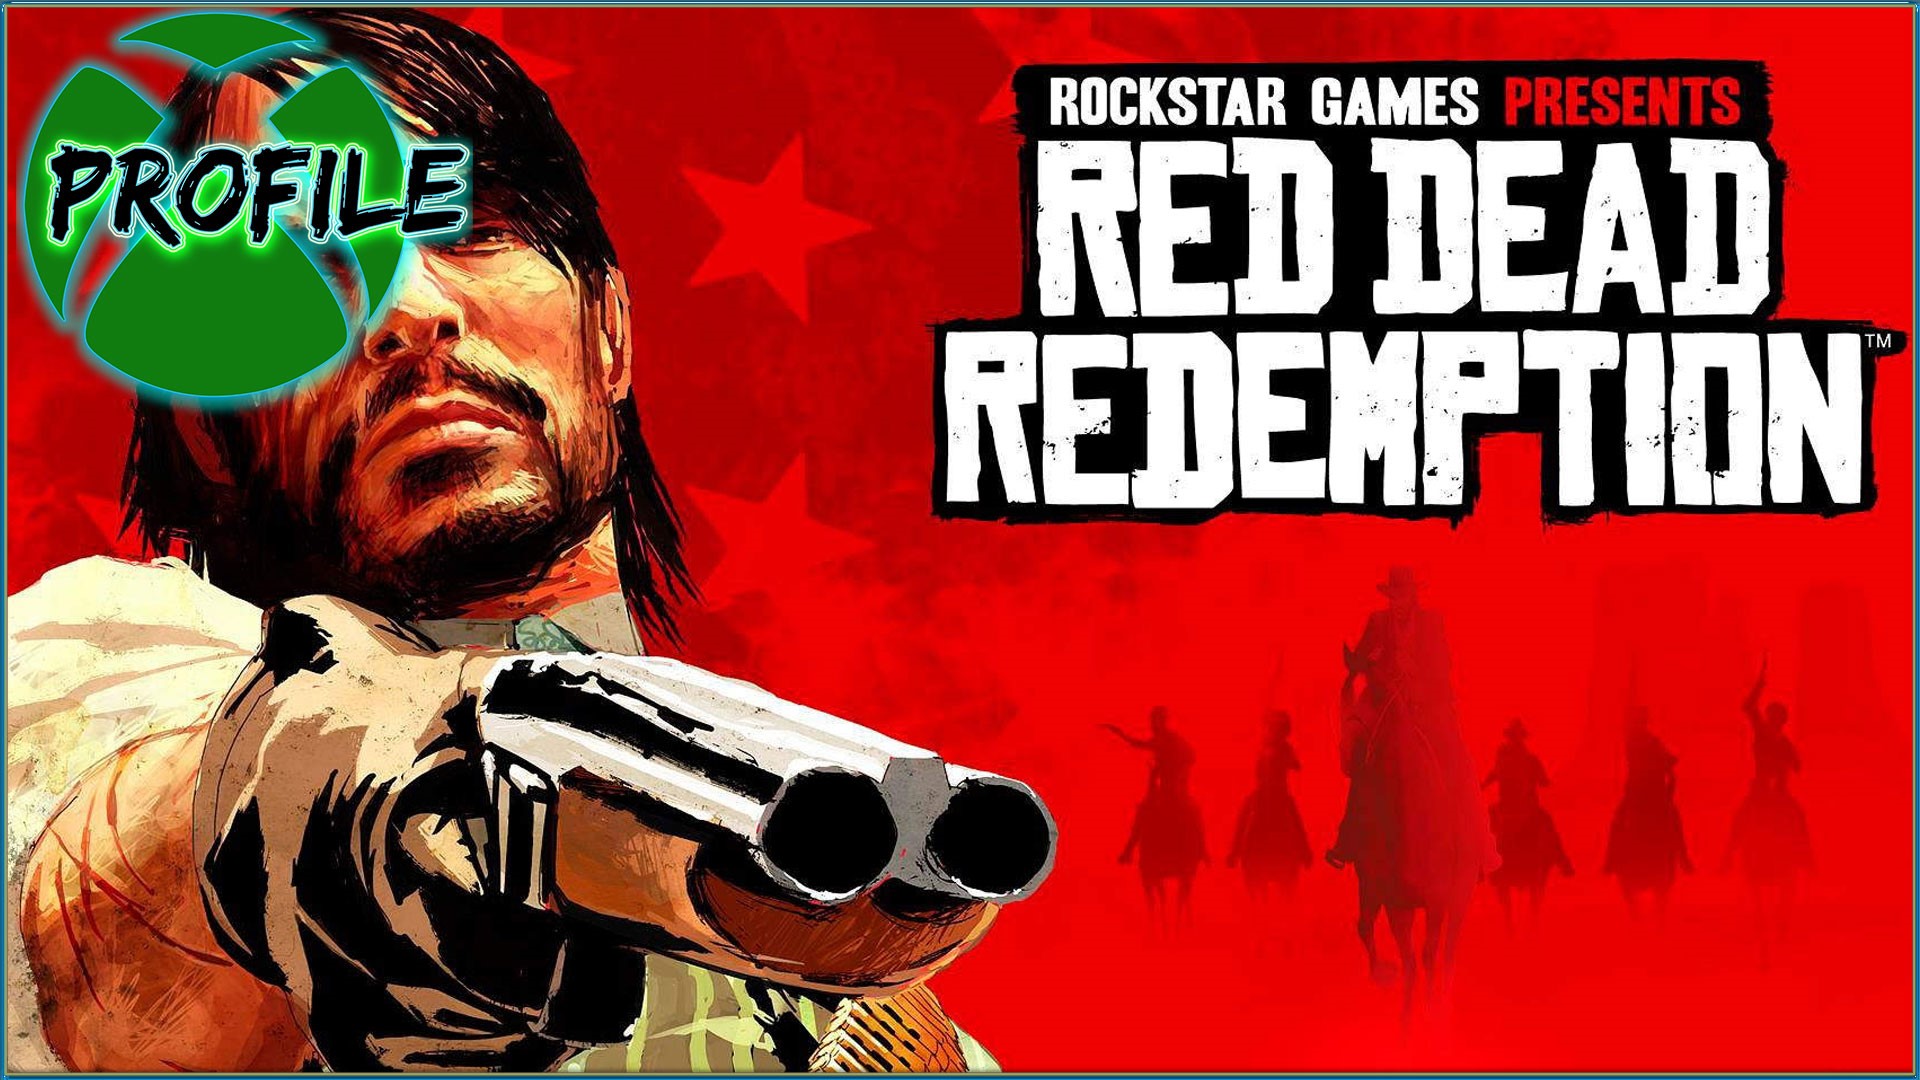 Red dead redemption xbox купить. Red Dead Redemption Xbox 360. Red Dead Redemption Xbox 360 купить. Red Dead Redemption след Огненный. Rdr Xbox 360 обложка.